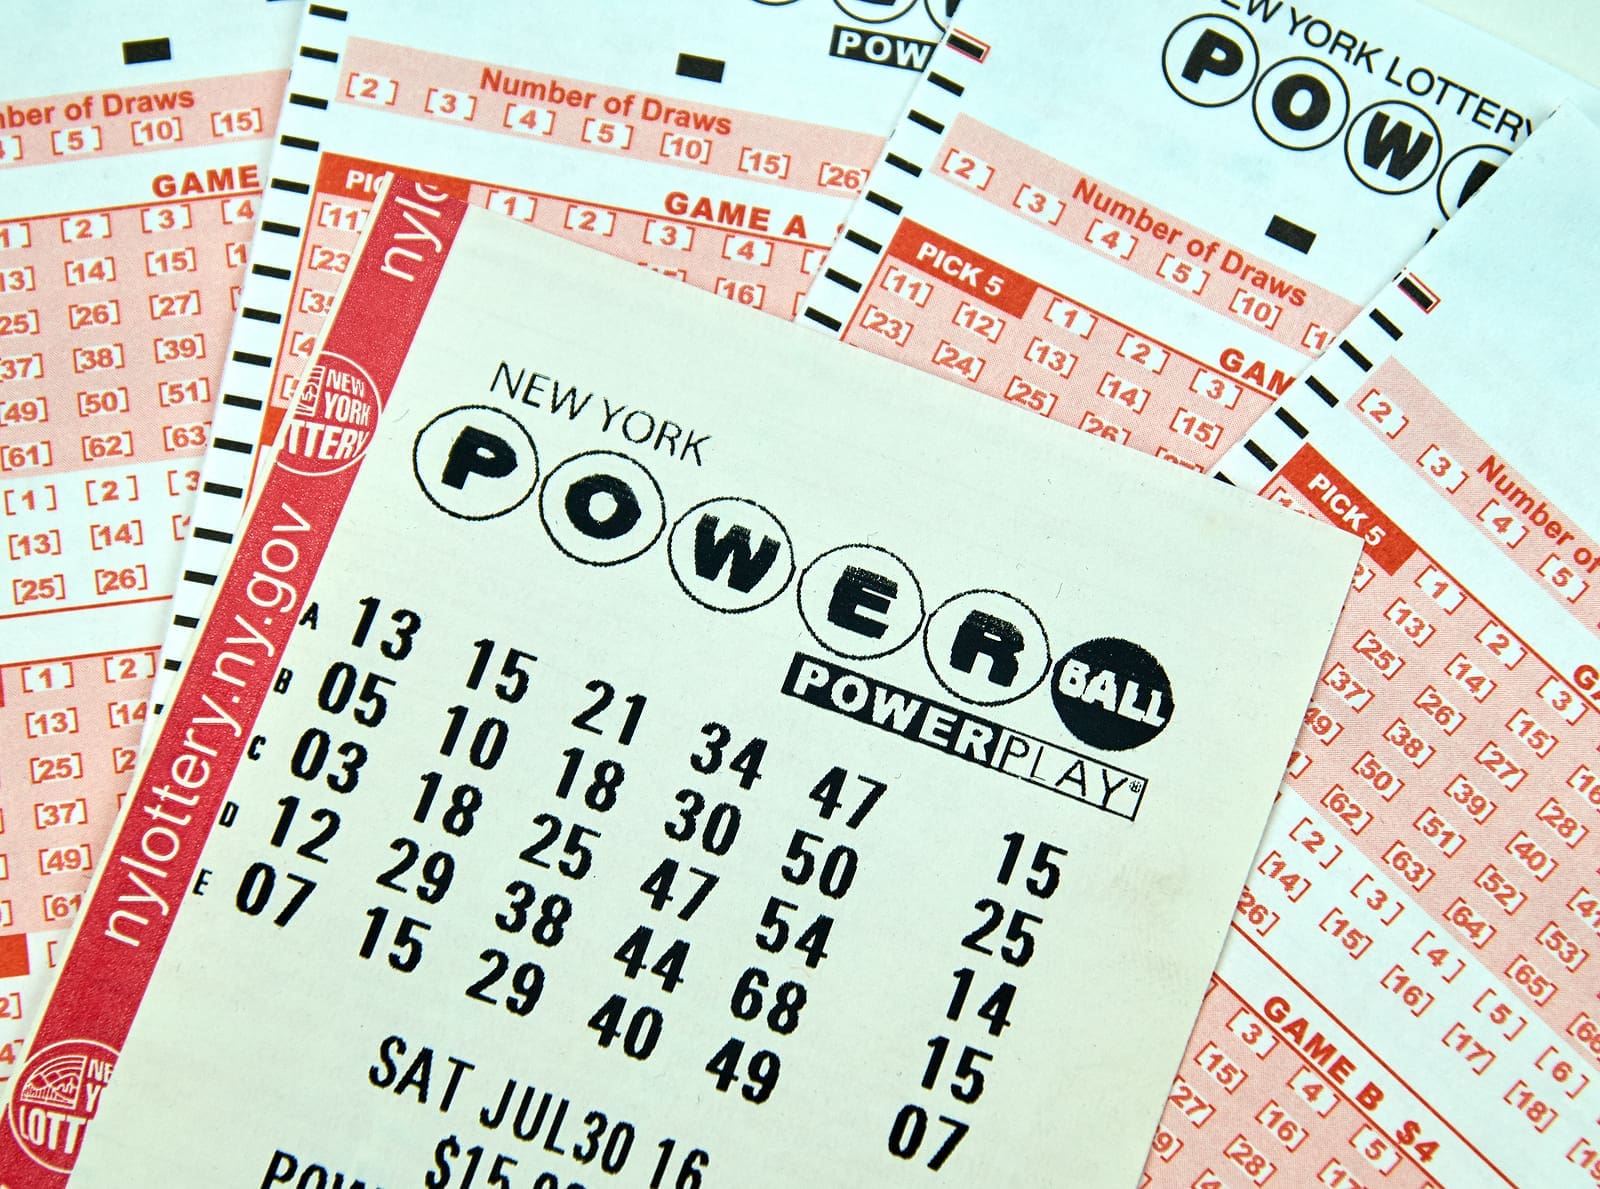 Missouri Lottery - $1 Million Powerball Prize Won